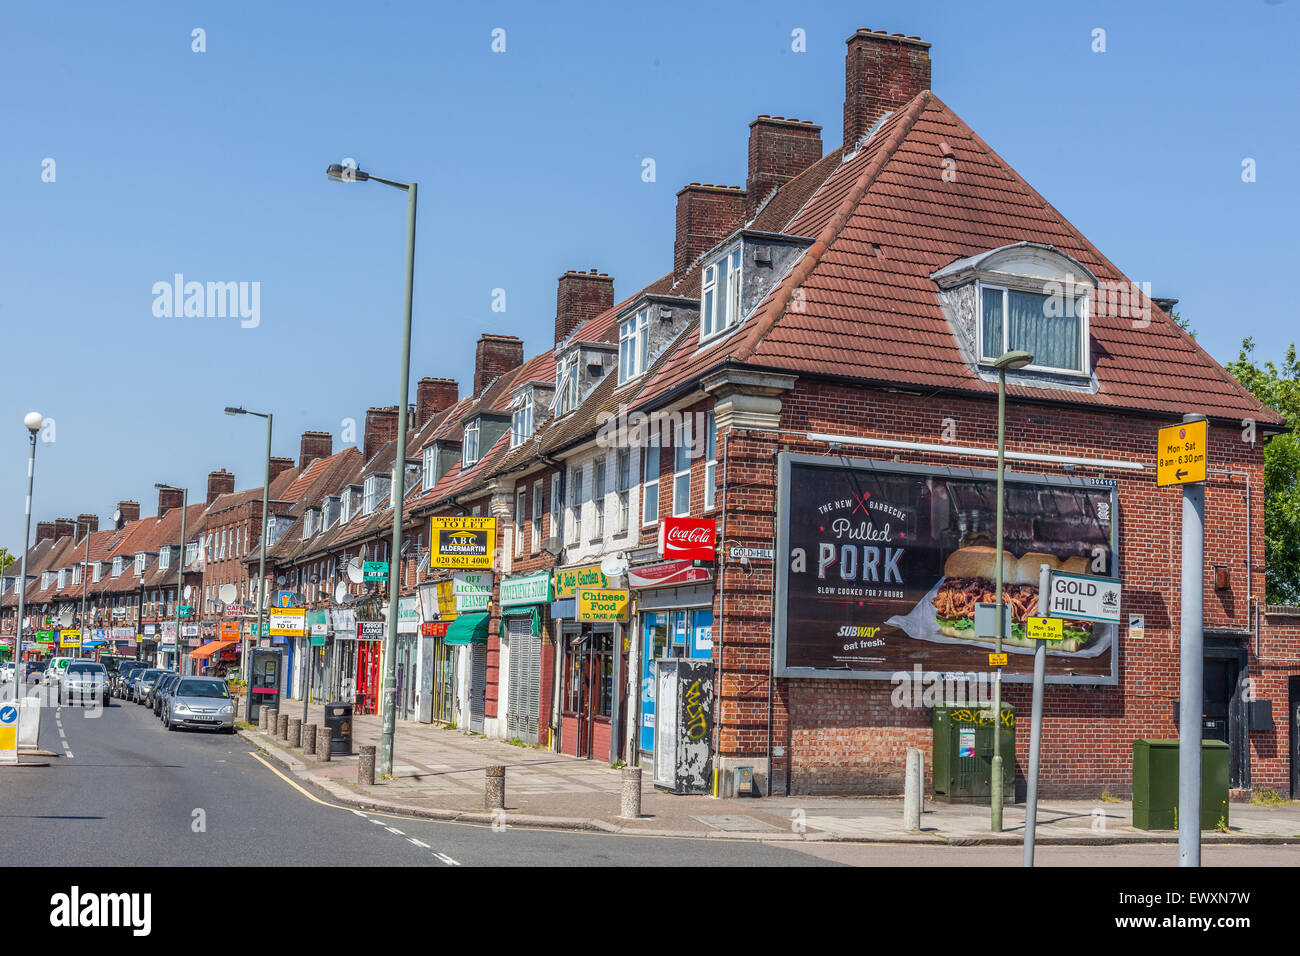 Row of terraced houses and shops on Deansbrook Road, High street, Edgware, HA8, England, UK. Stock Photo